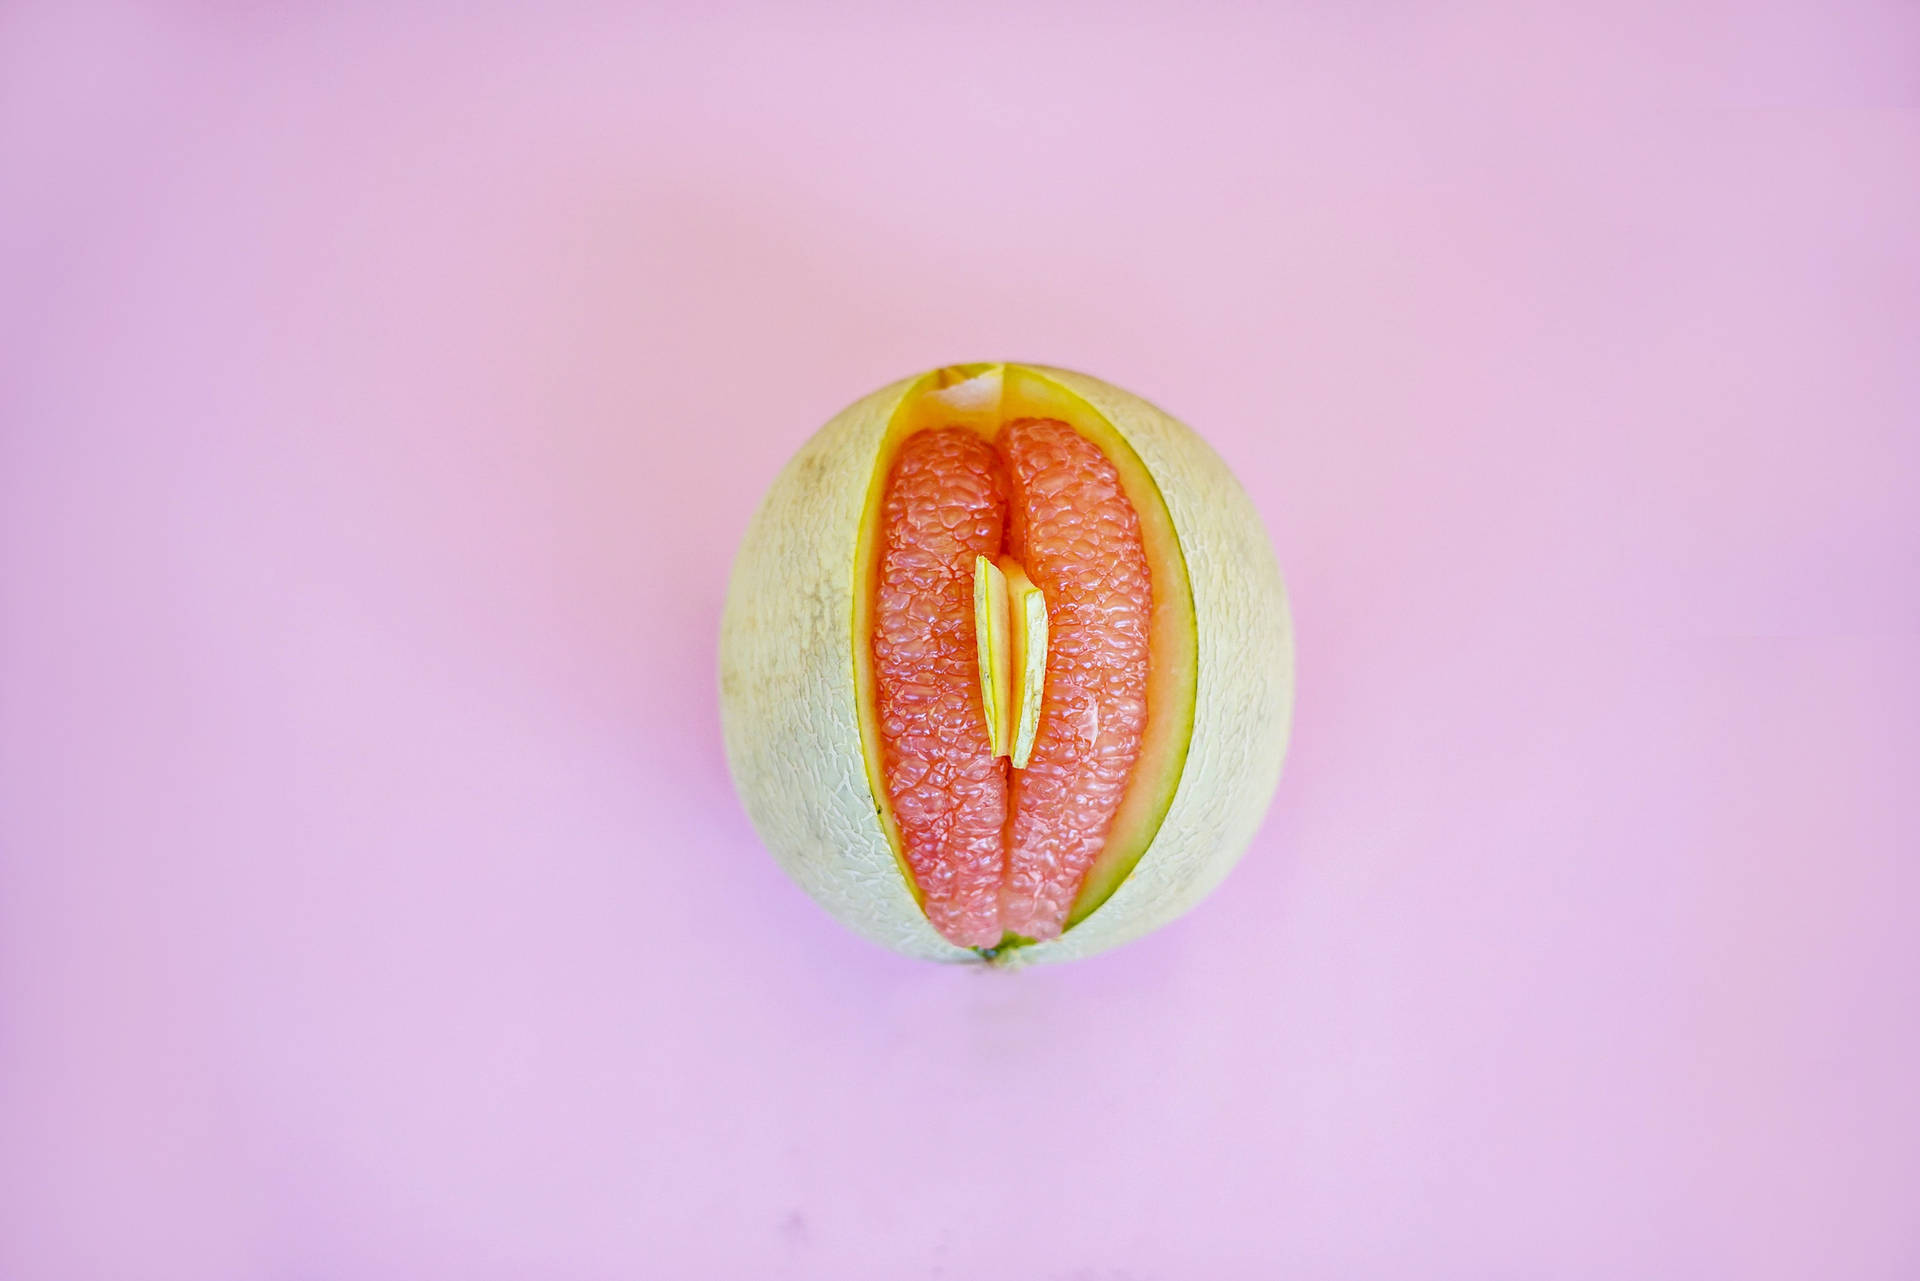 Artistic Representation of Sexual Symbol using Pomelo Fruit Wallpaper